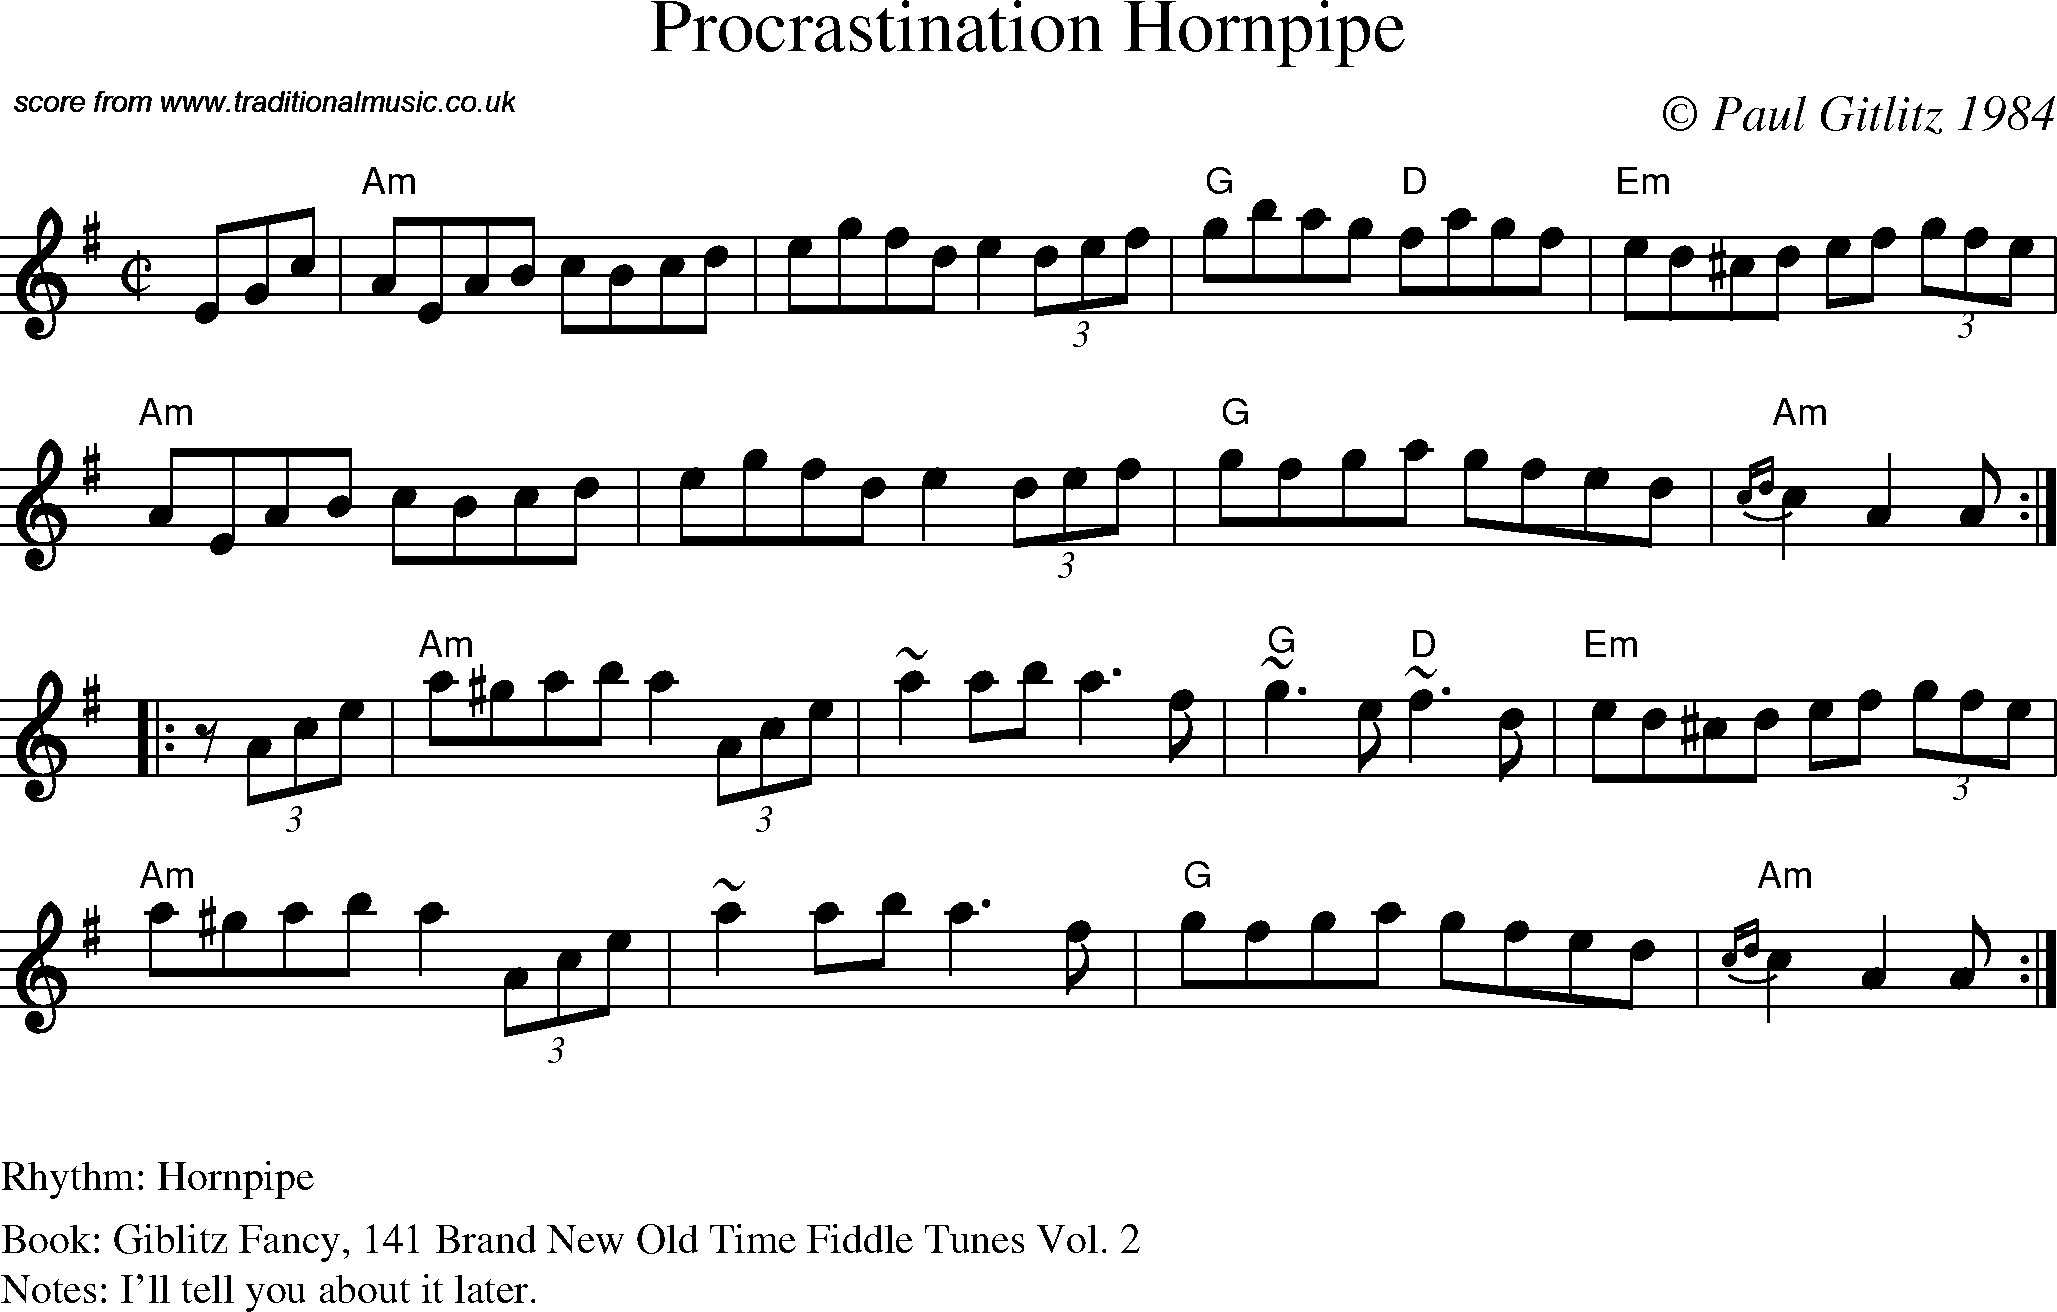 Sheet Music Score for Hornpipe/Strathspey - Procrastination Hornpipe